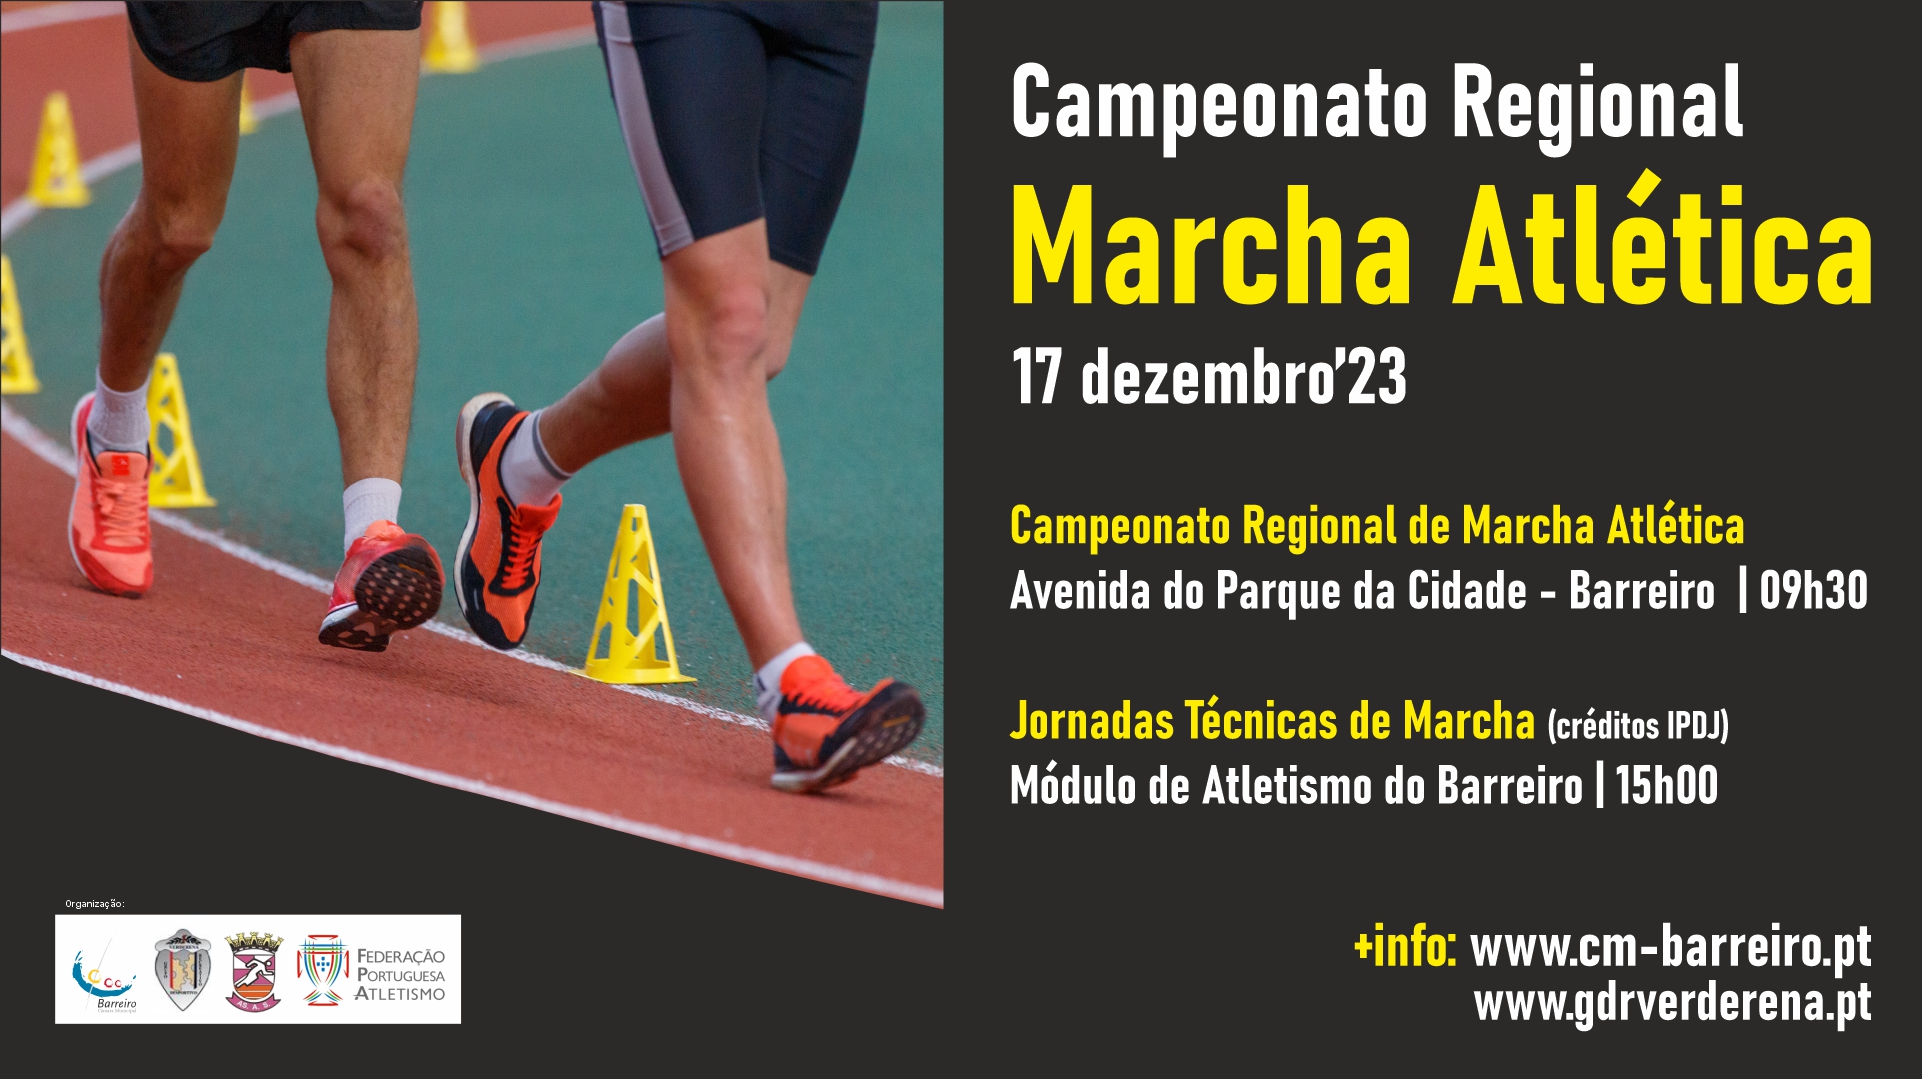 Campeonato Regional de Marcha Atlética 2023 & Jornadas Técnicas